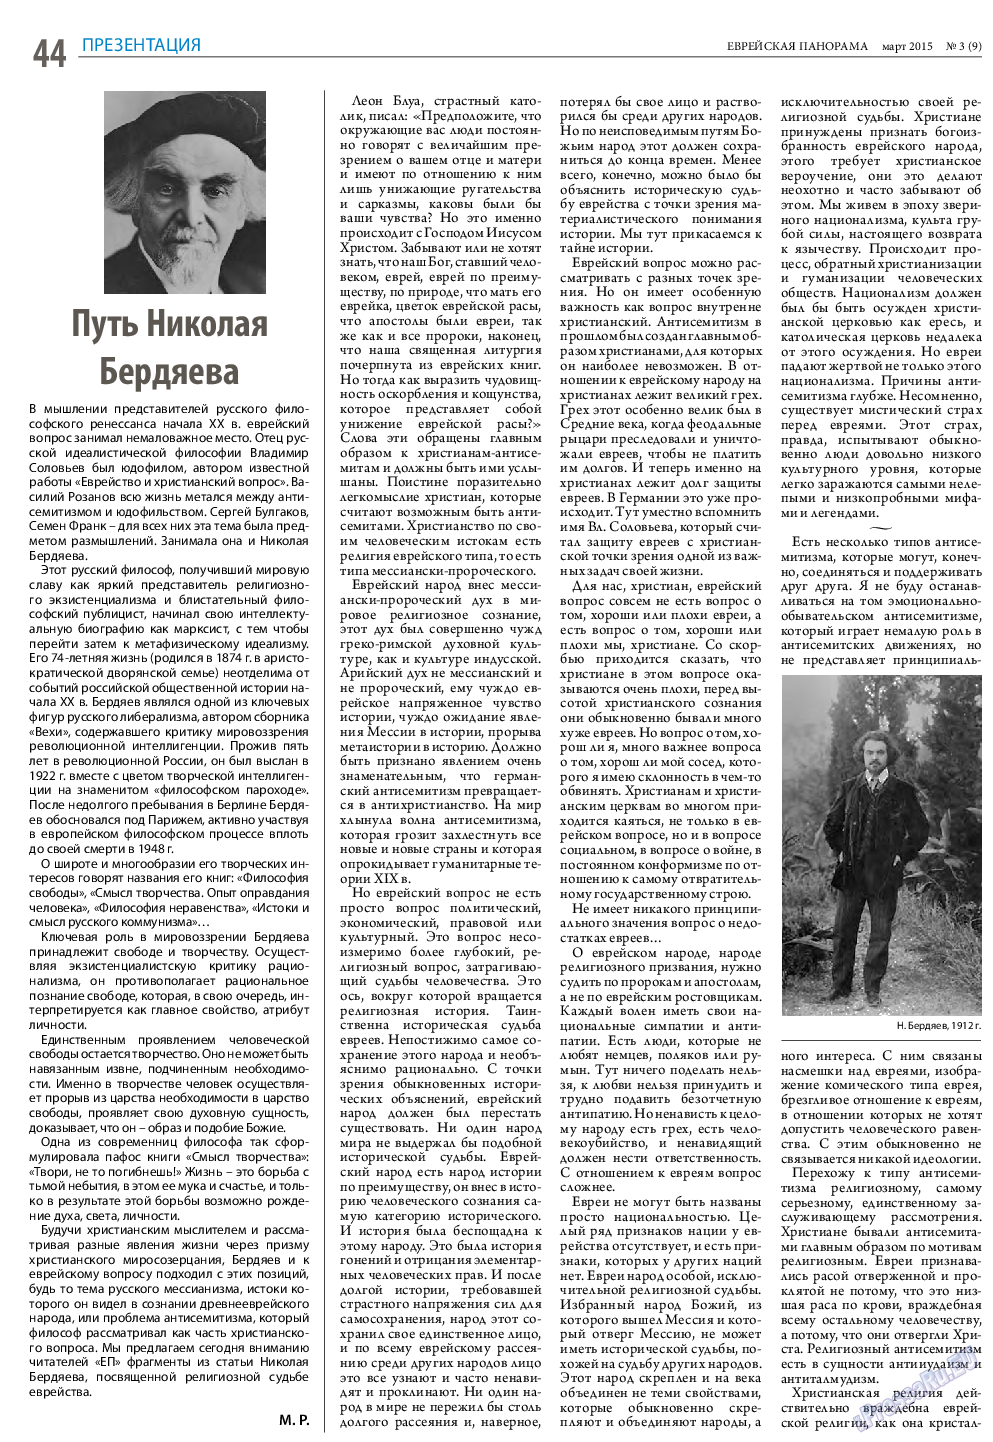 Еврейская панорама, газета. 2015 №3 стр.44